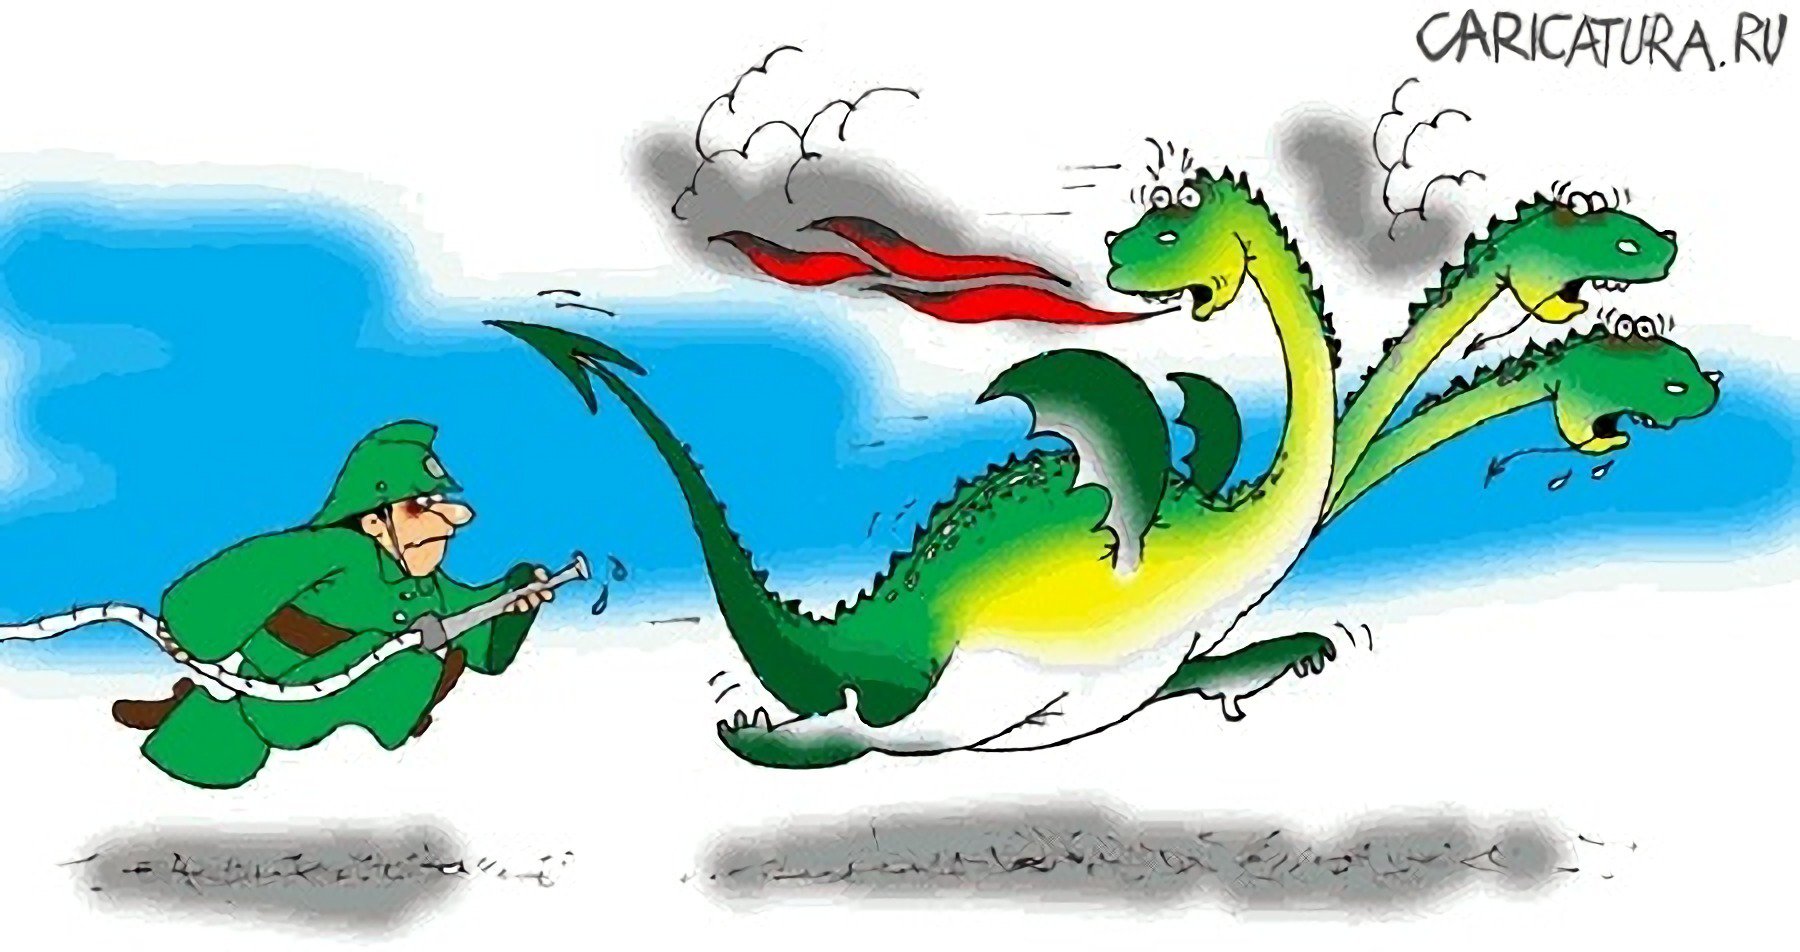 Карикатура "Дракон", Сергей Нетесов